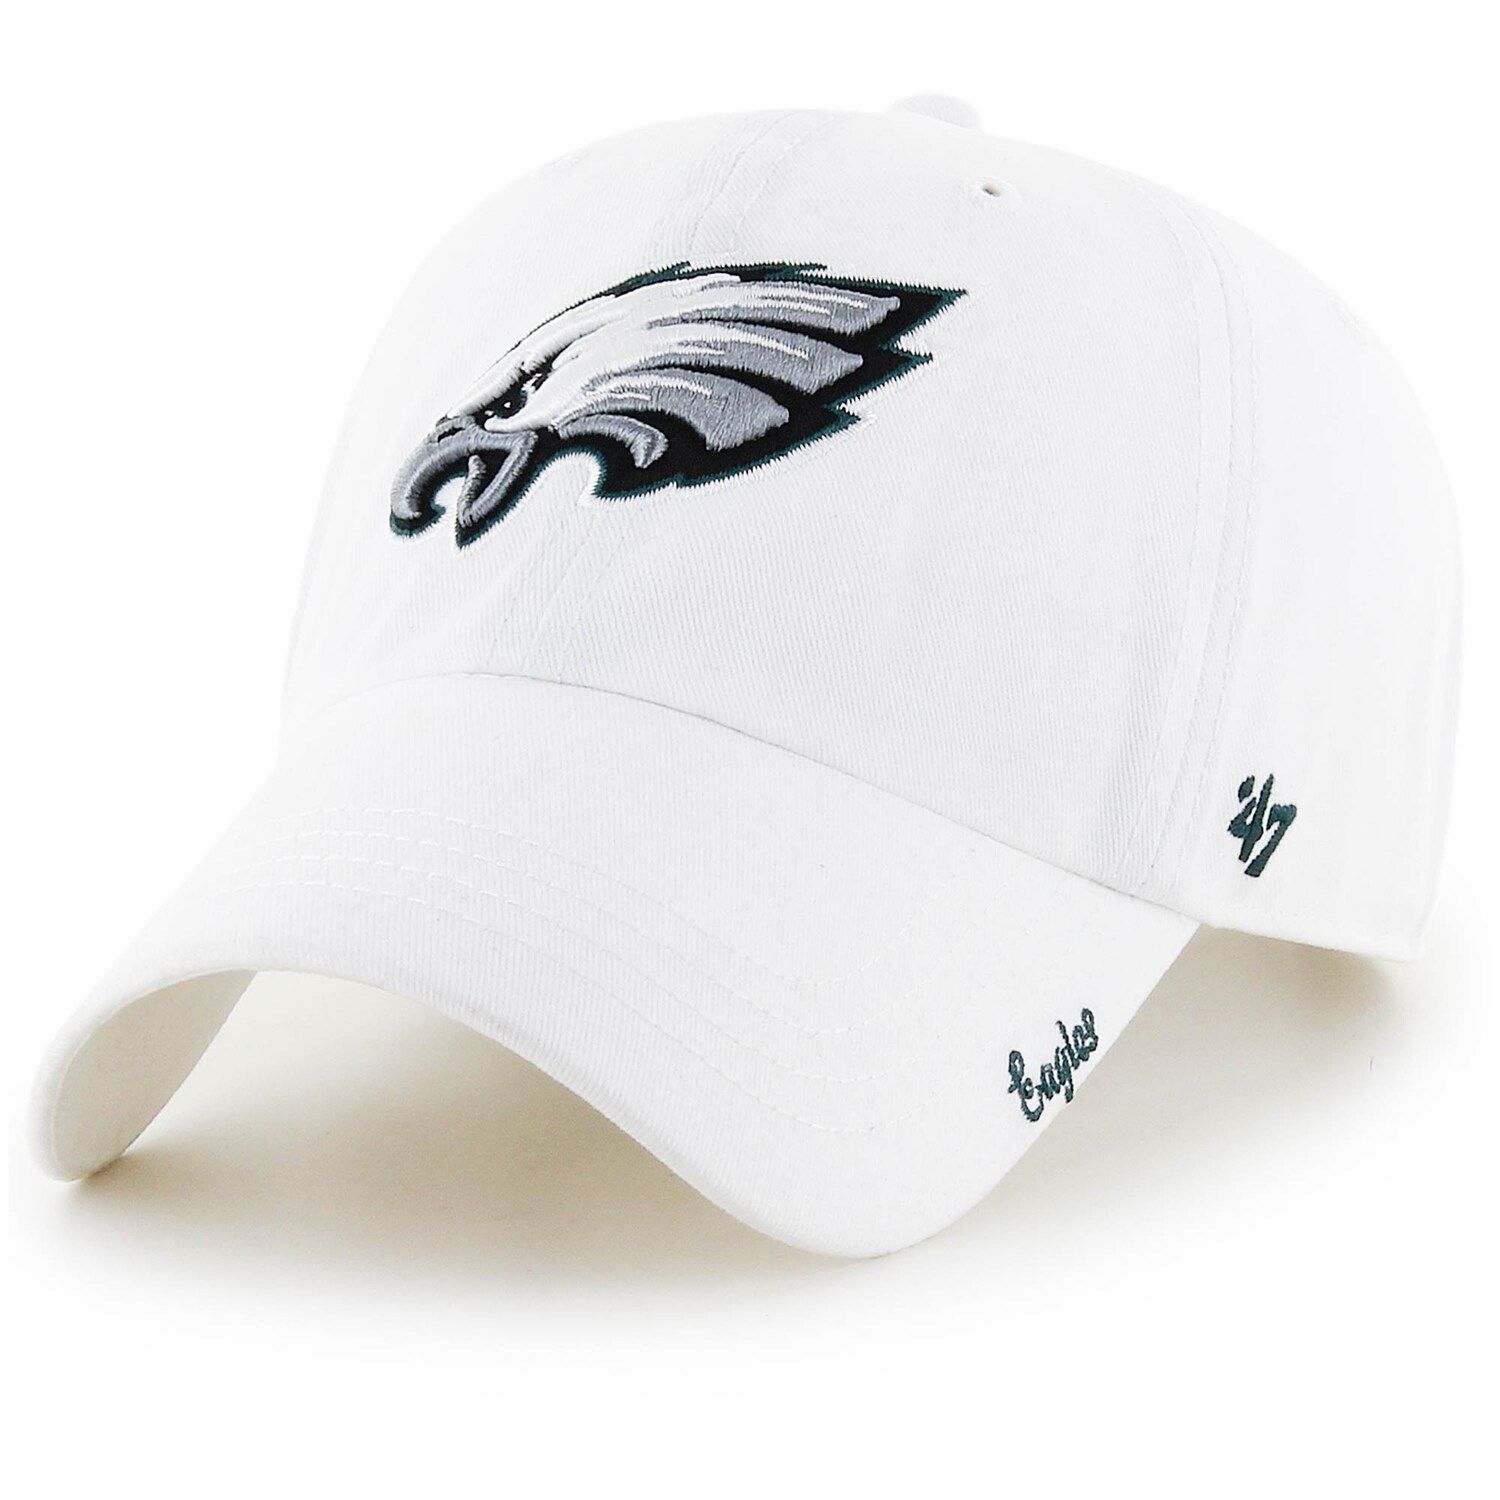 Eagles white cap